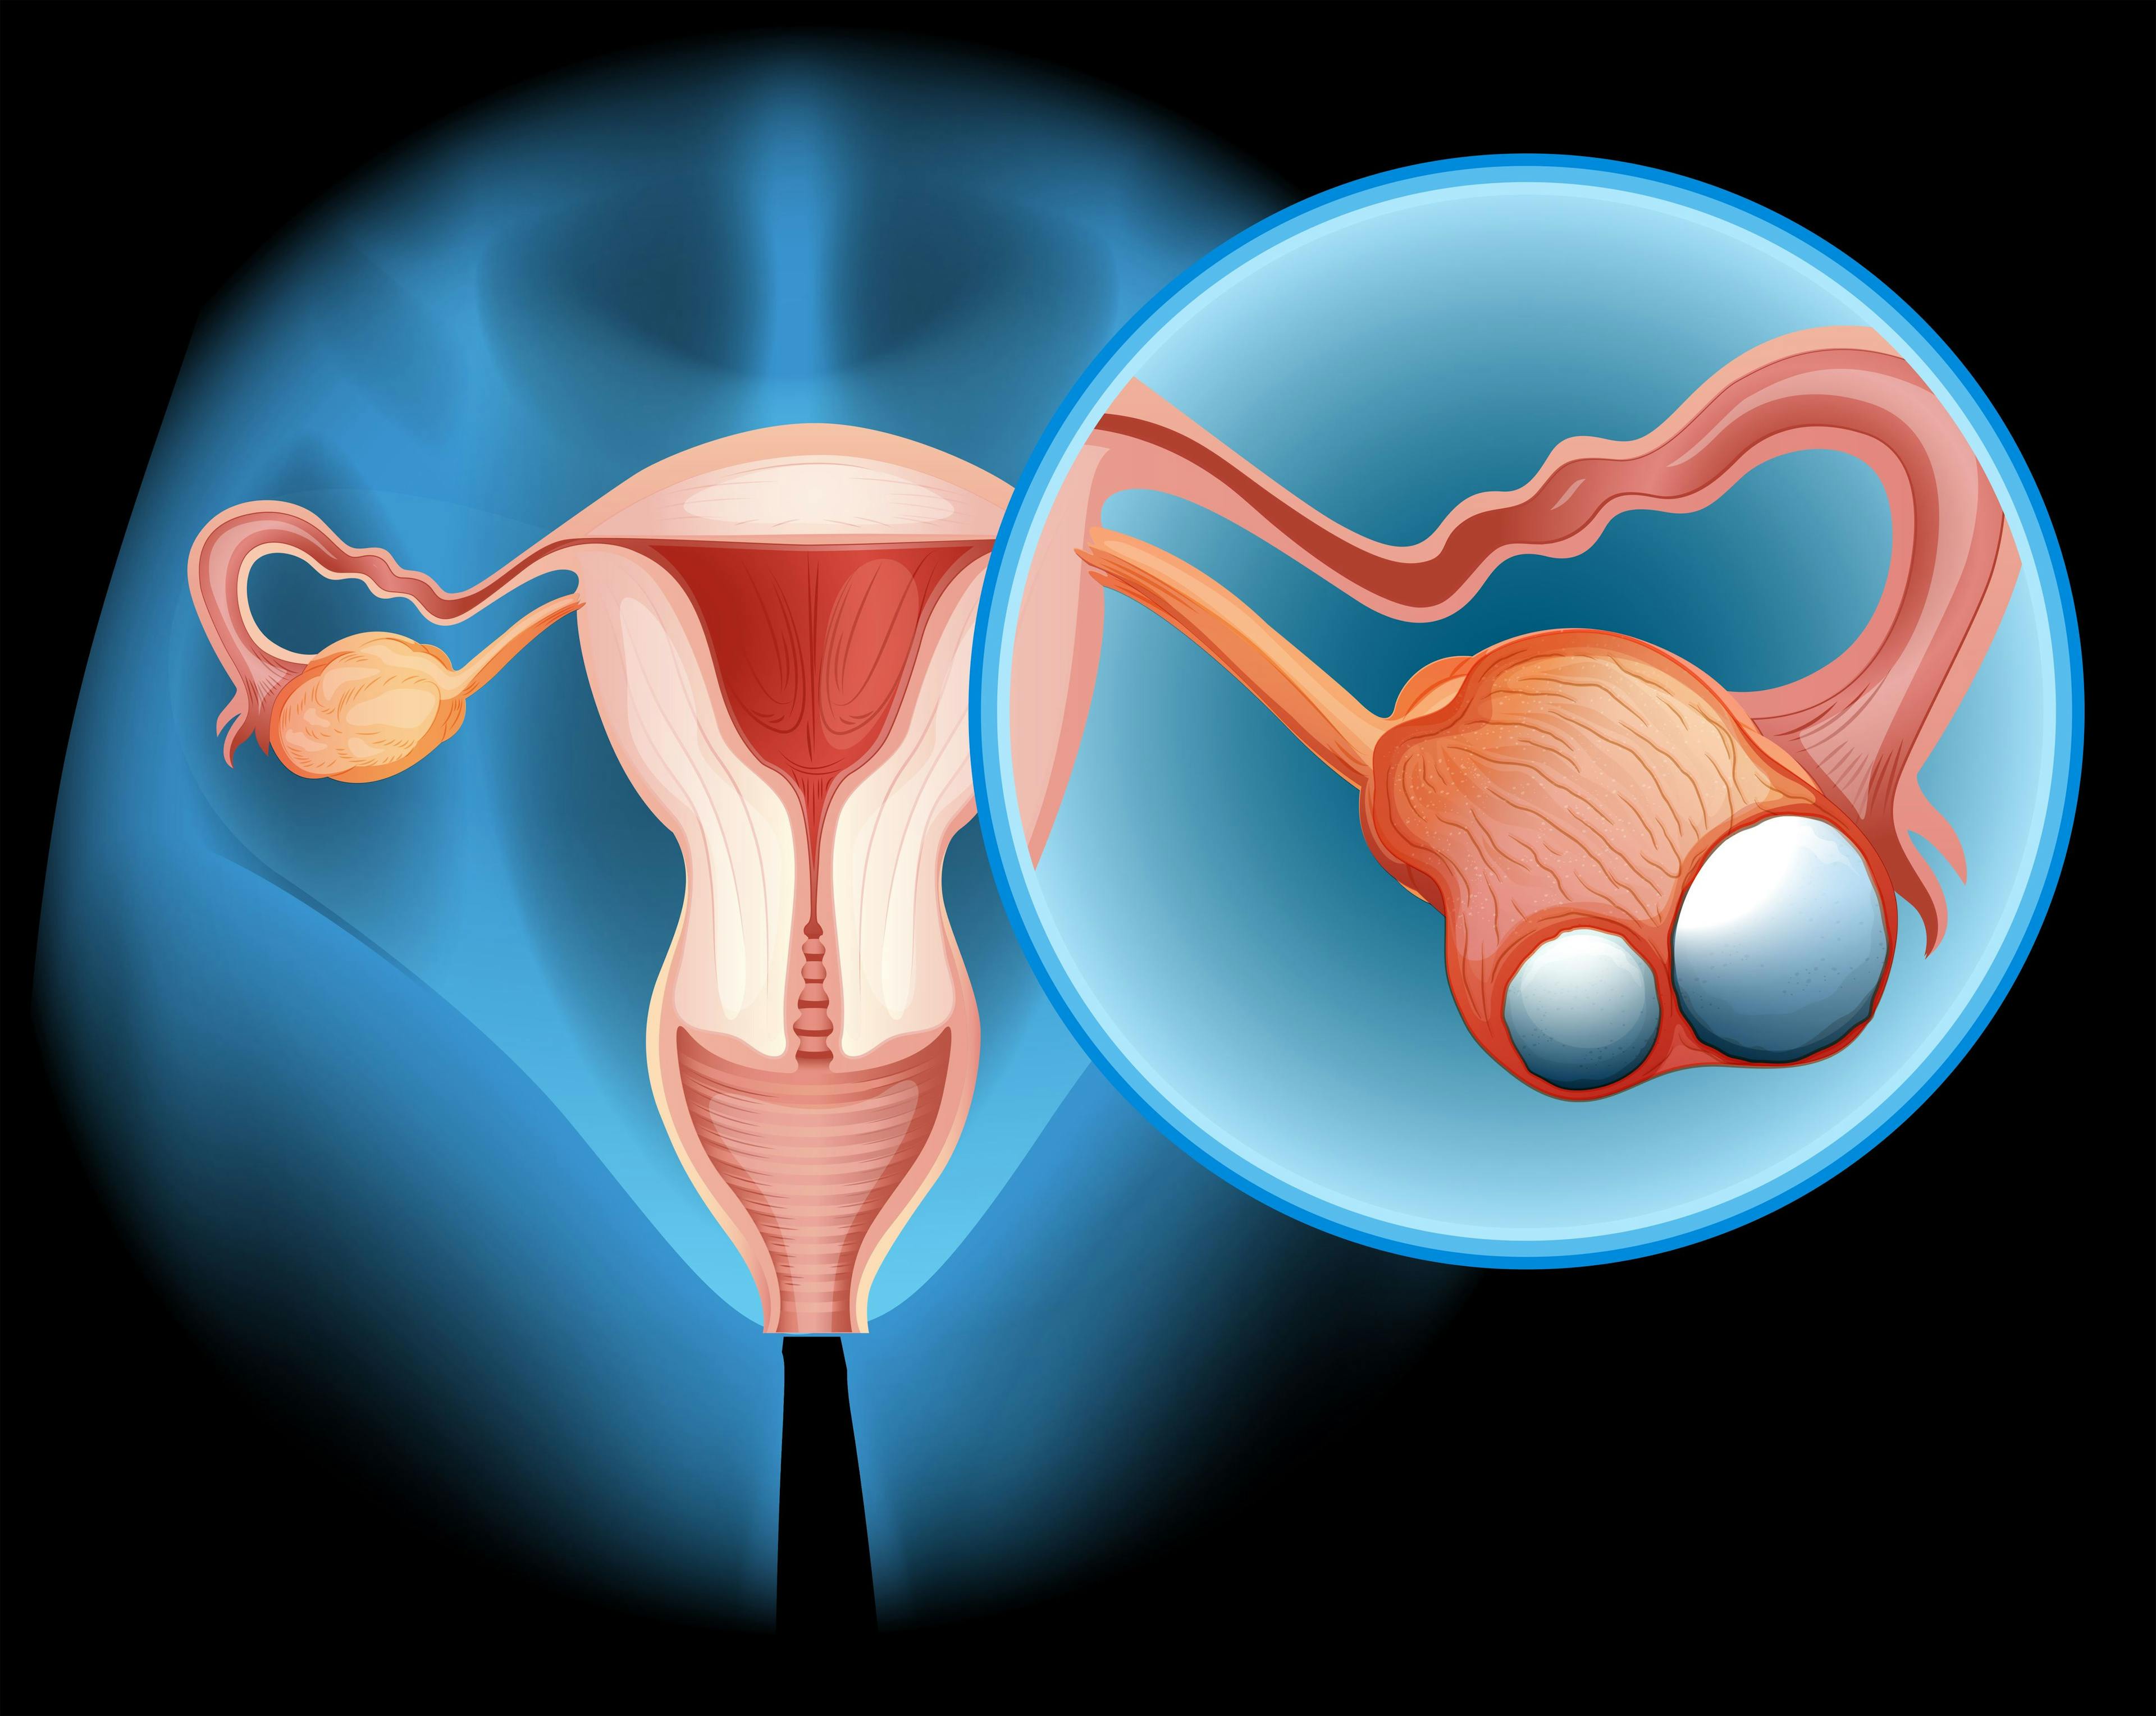 senaparib shows improvements for PFS in ovarian cancer